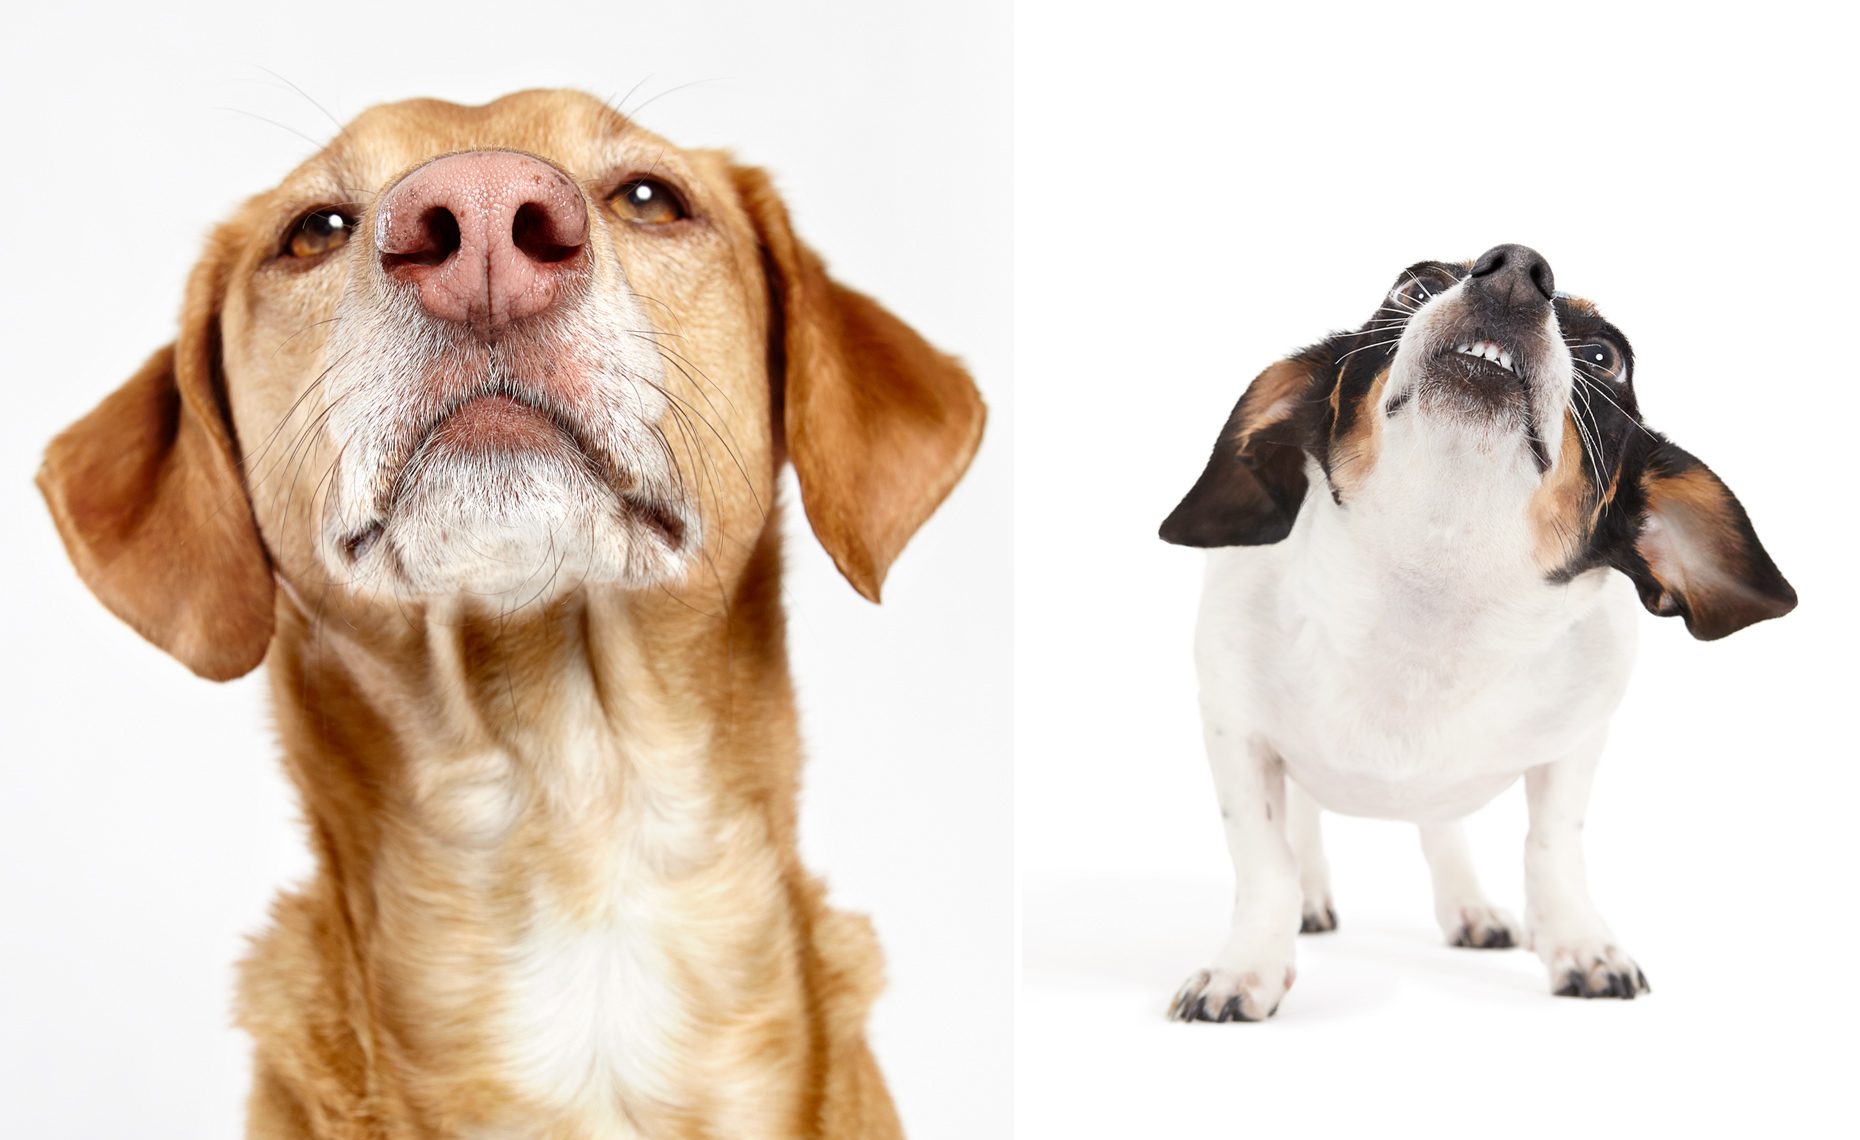 Vizsla and dachshund mix portraits